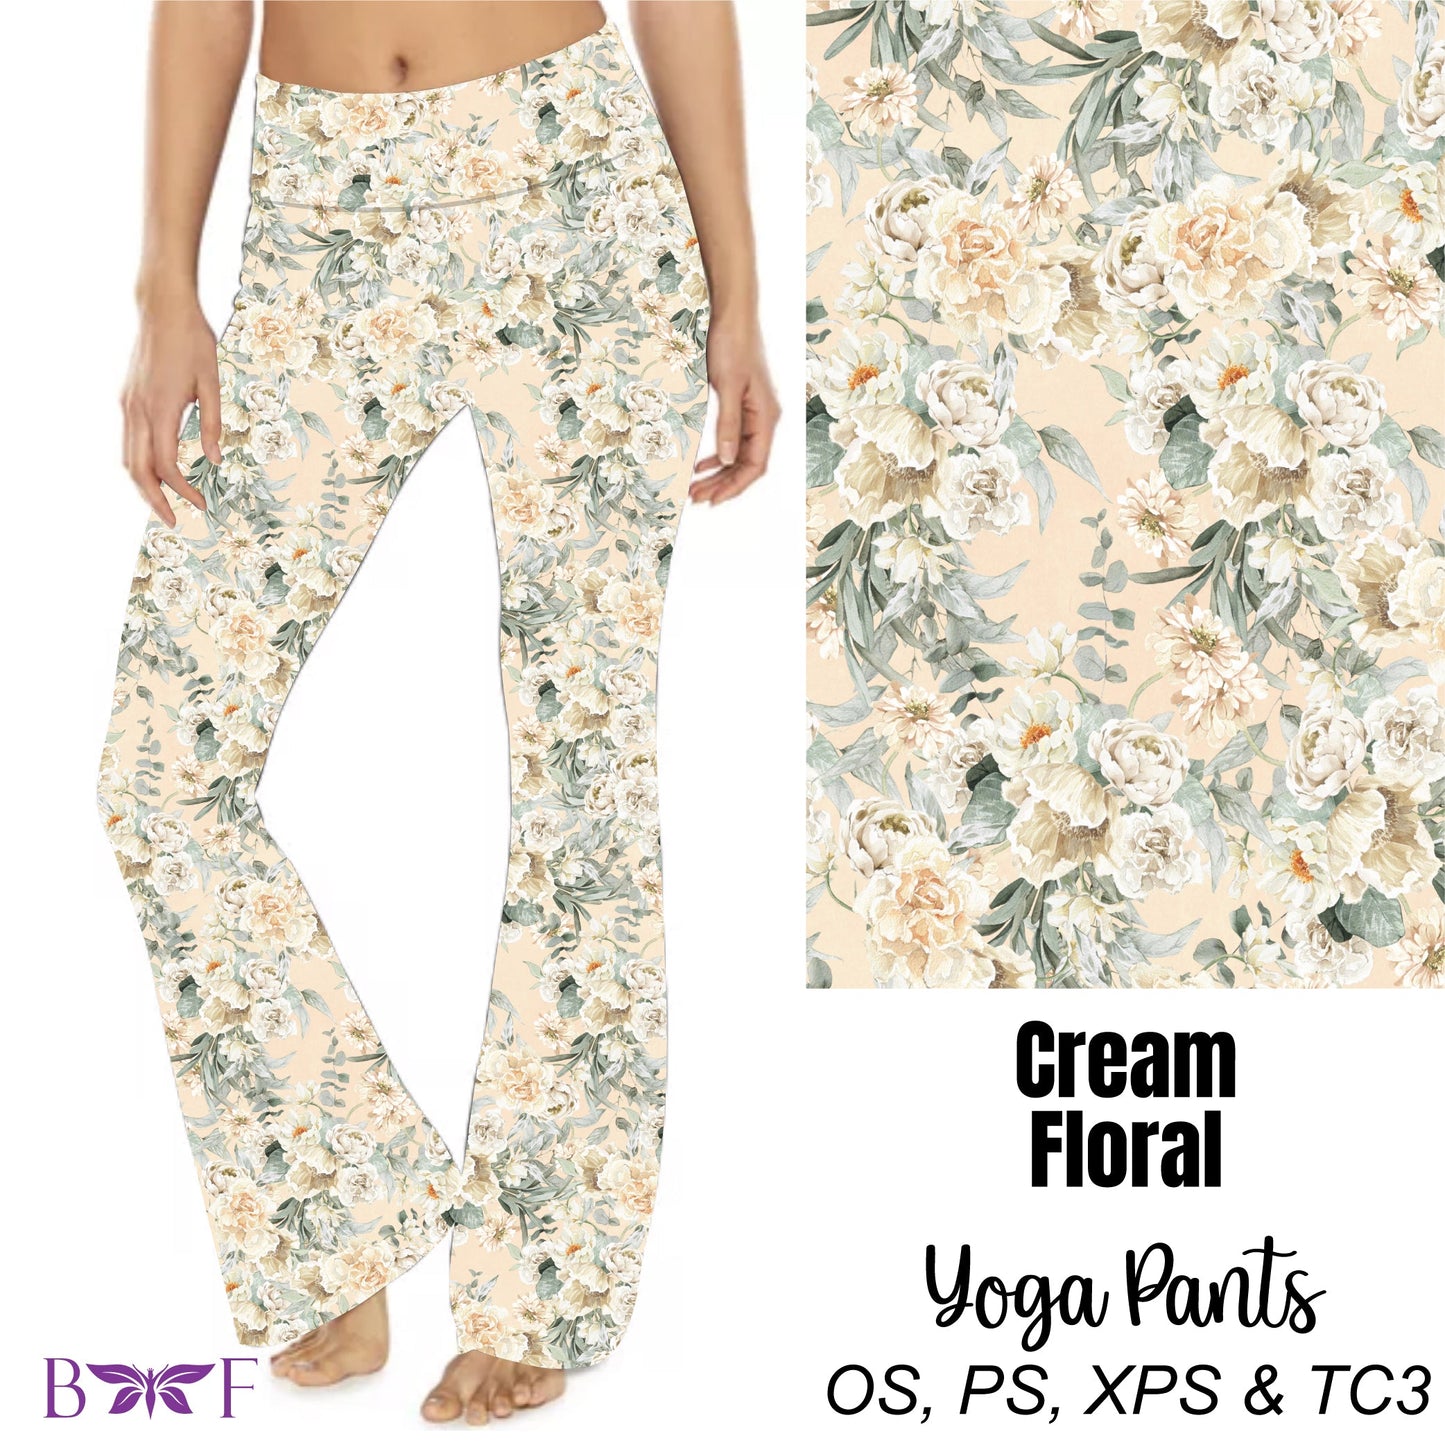 Cream Floral yoga pants